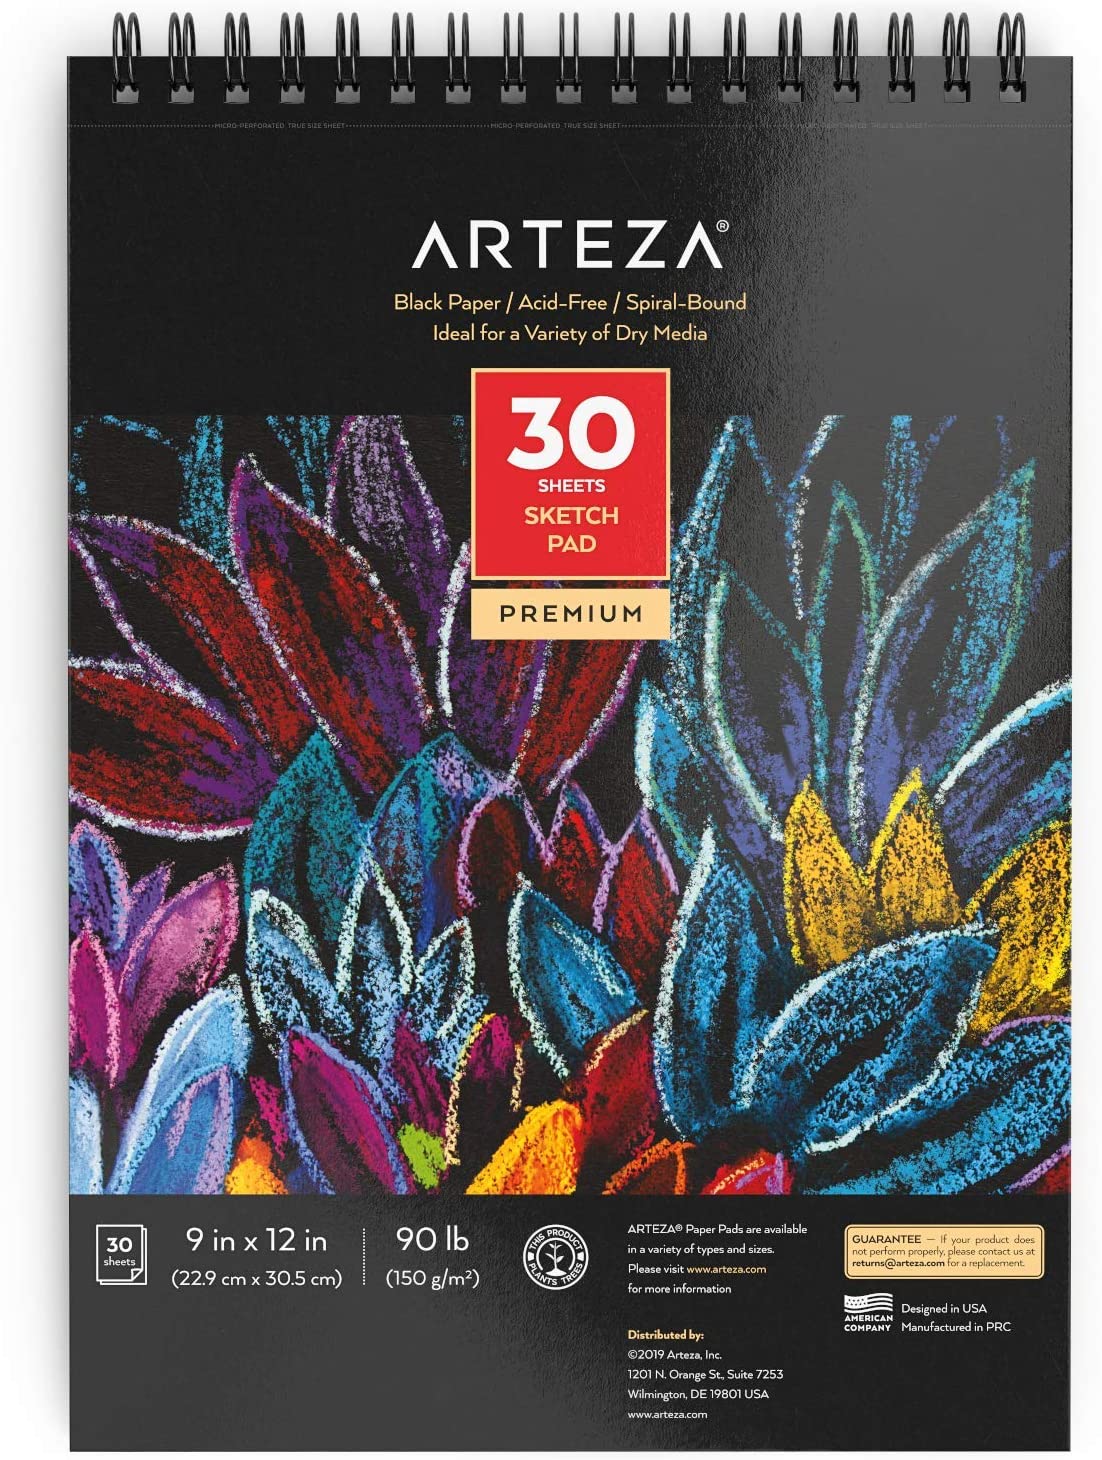 Arteza Sketchbook, 9x12, 100 Sheets of Drawing Paper